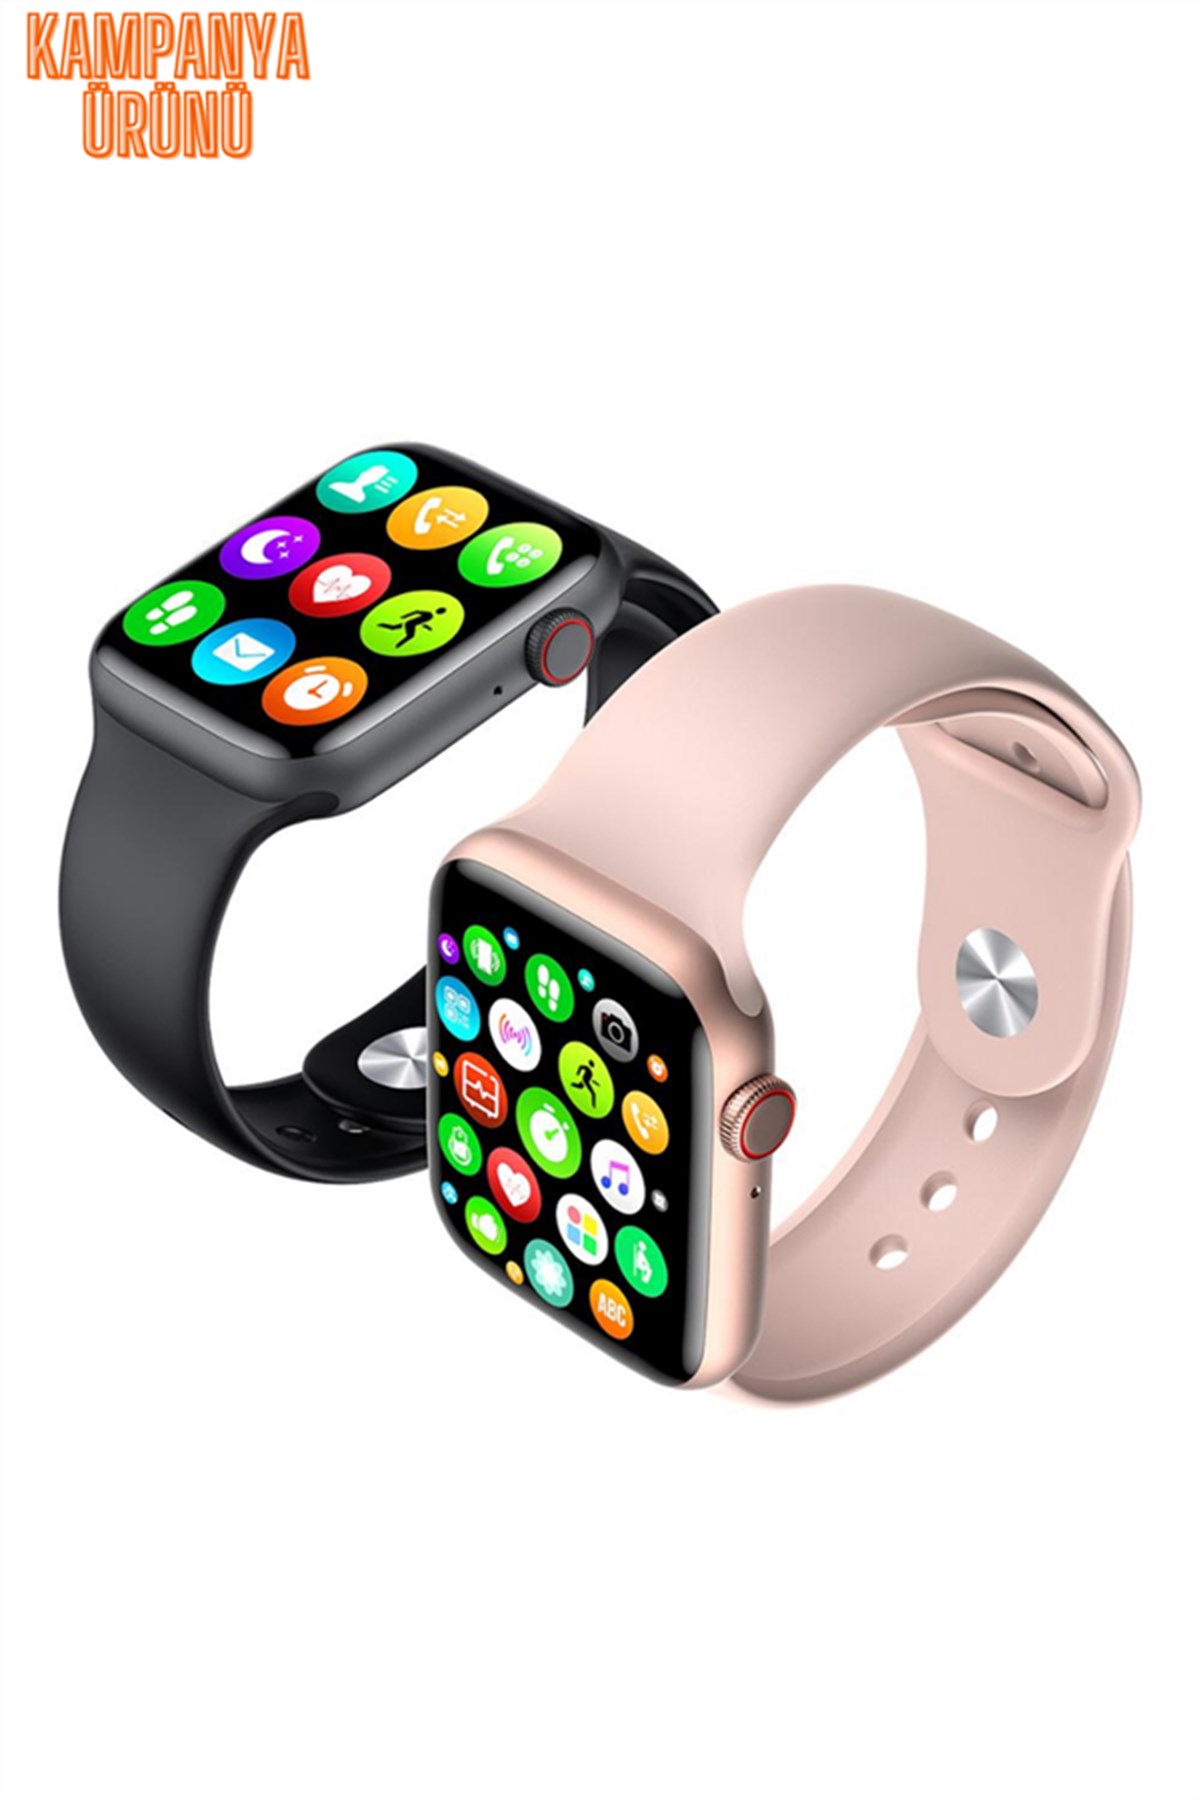 Watch 6 Plus Akıllı Saat Smart Watch ios ve Android destekler